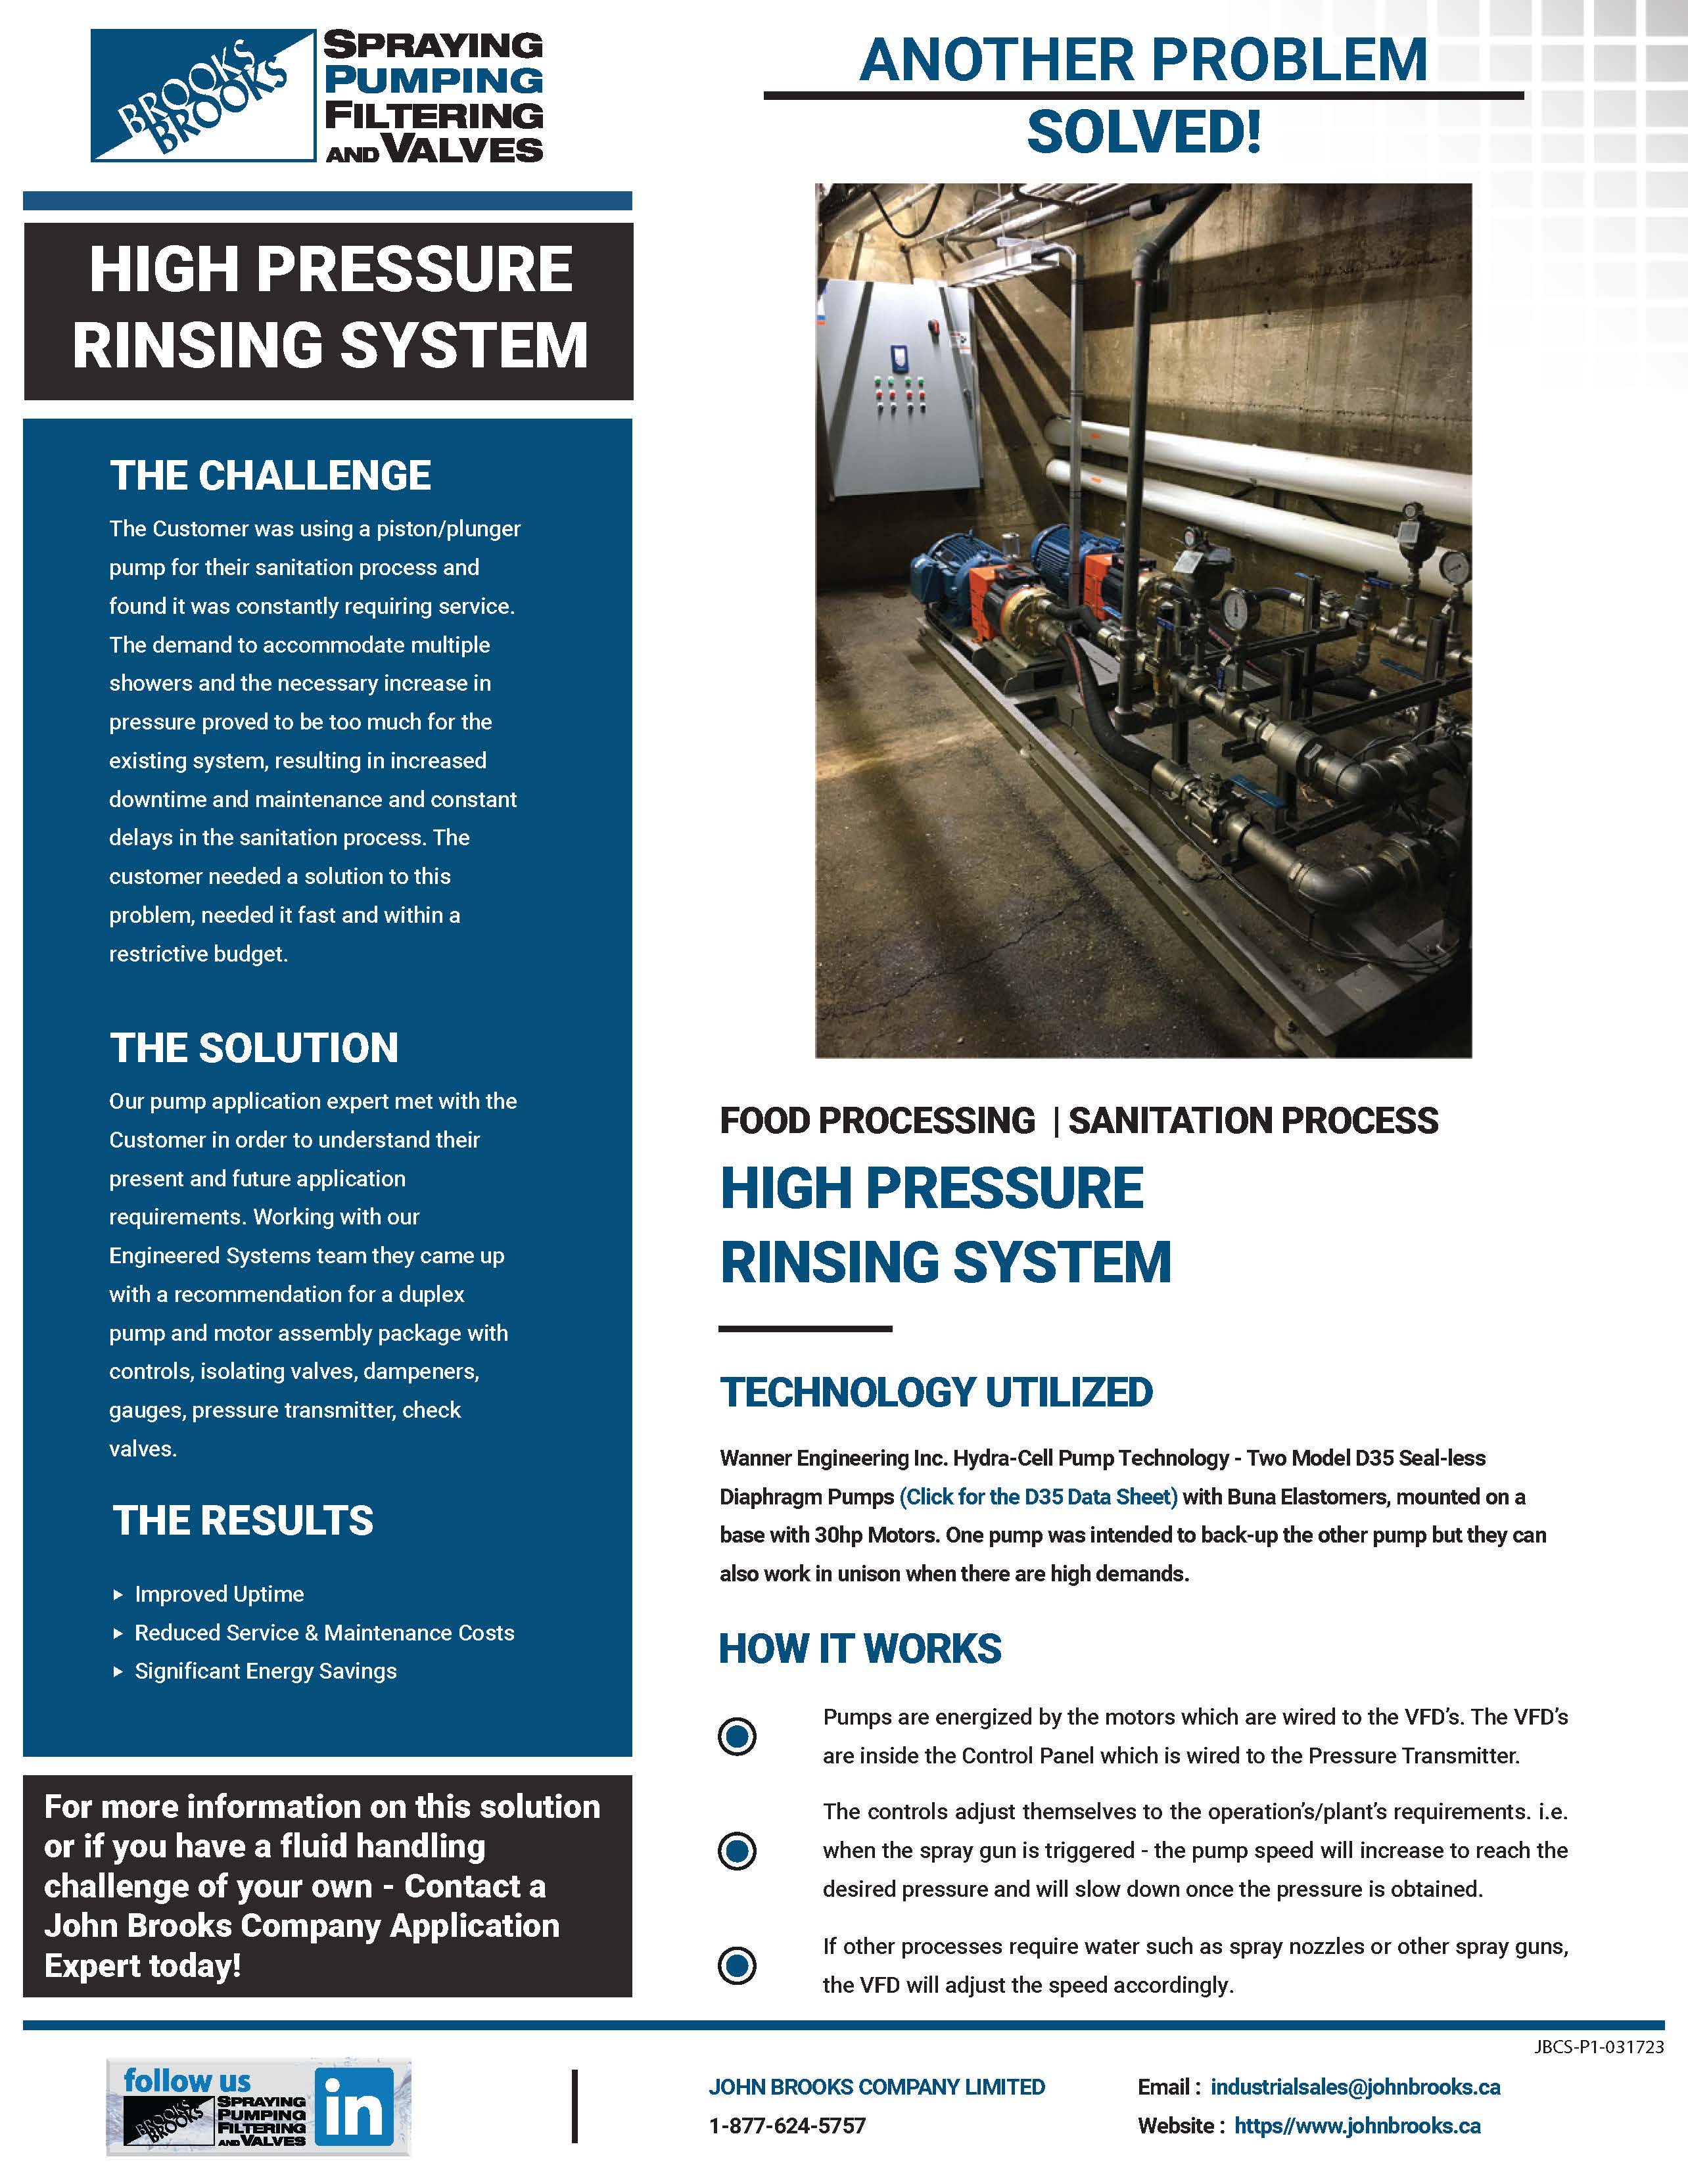 High Pressure Rinsing Pump System for Sanitation Process